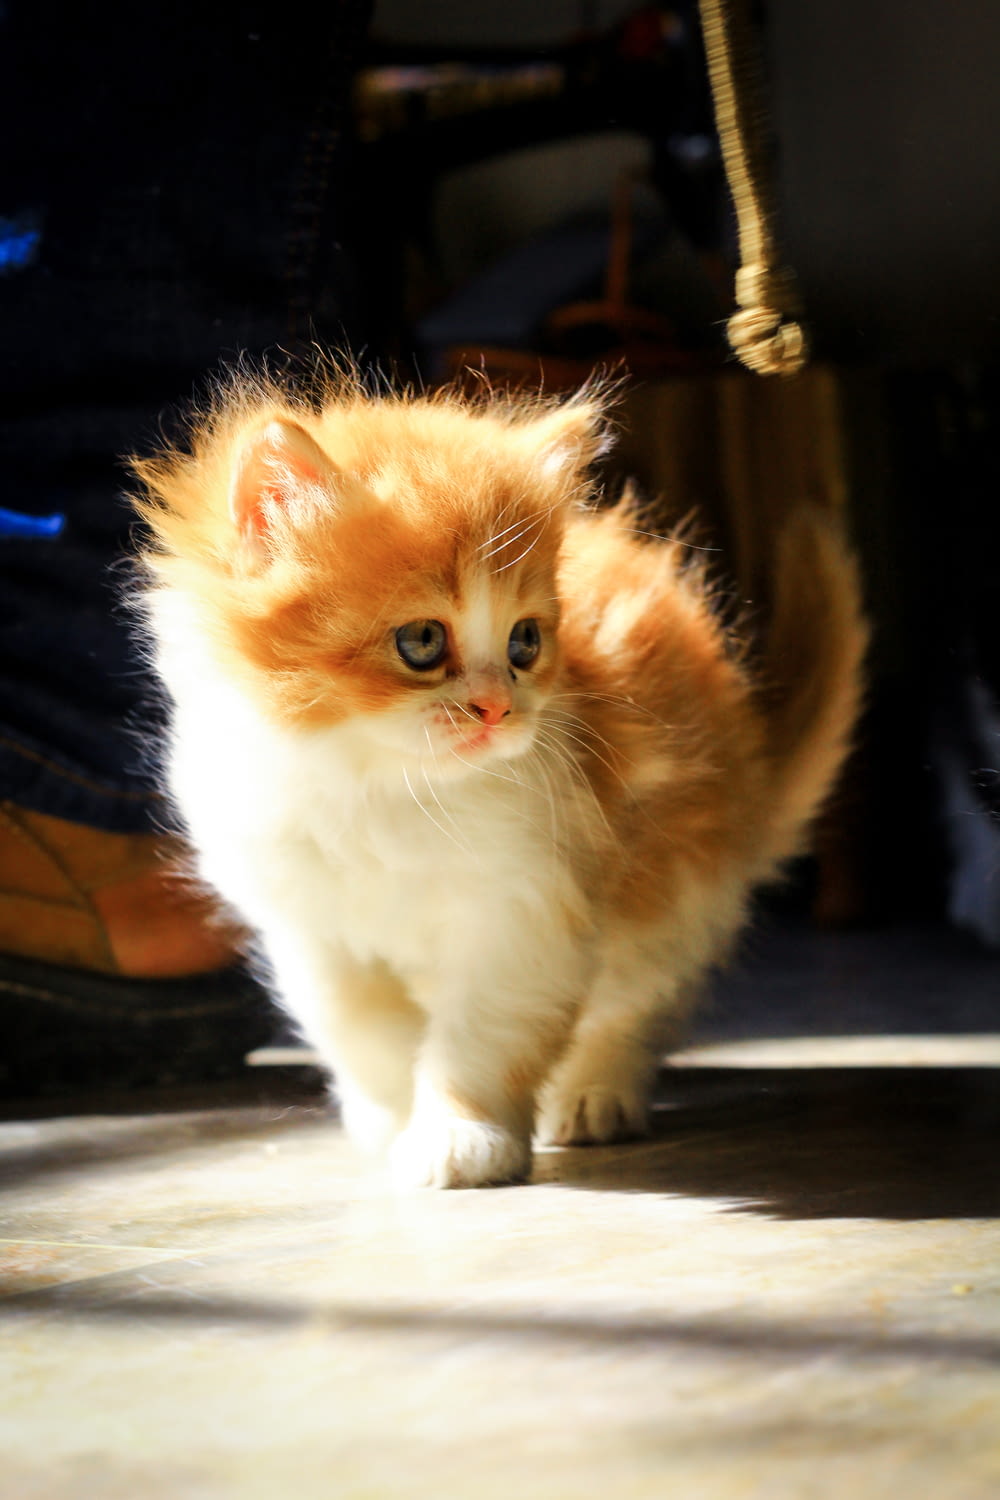 a small orange and white kitten walking across a floor